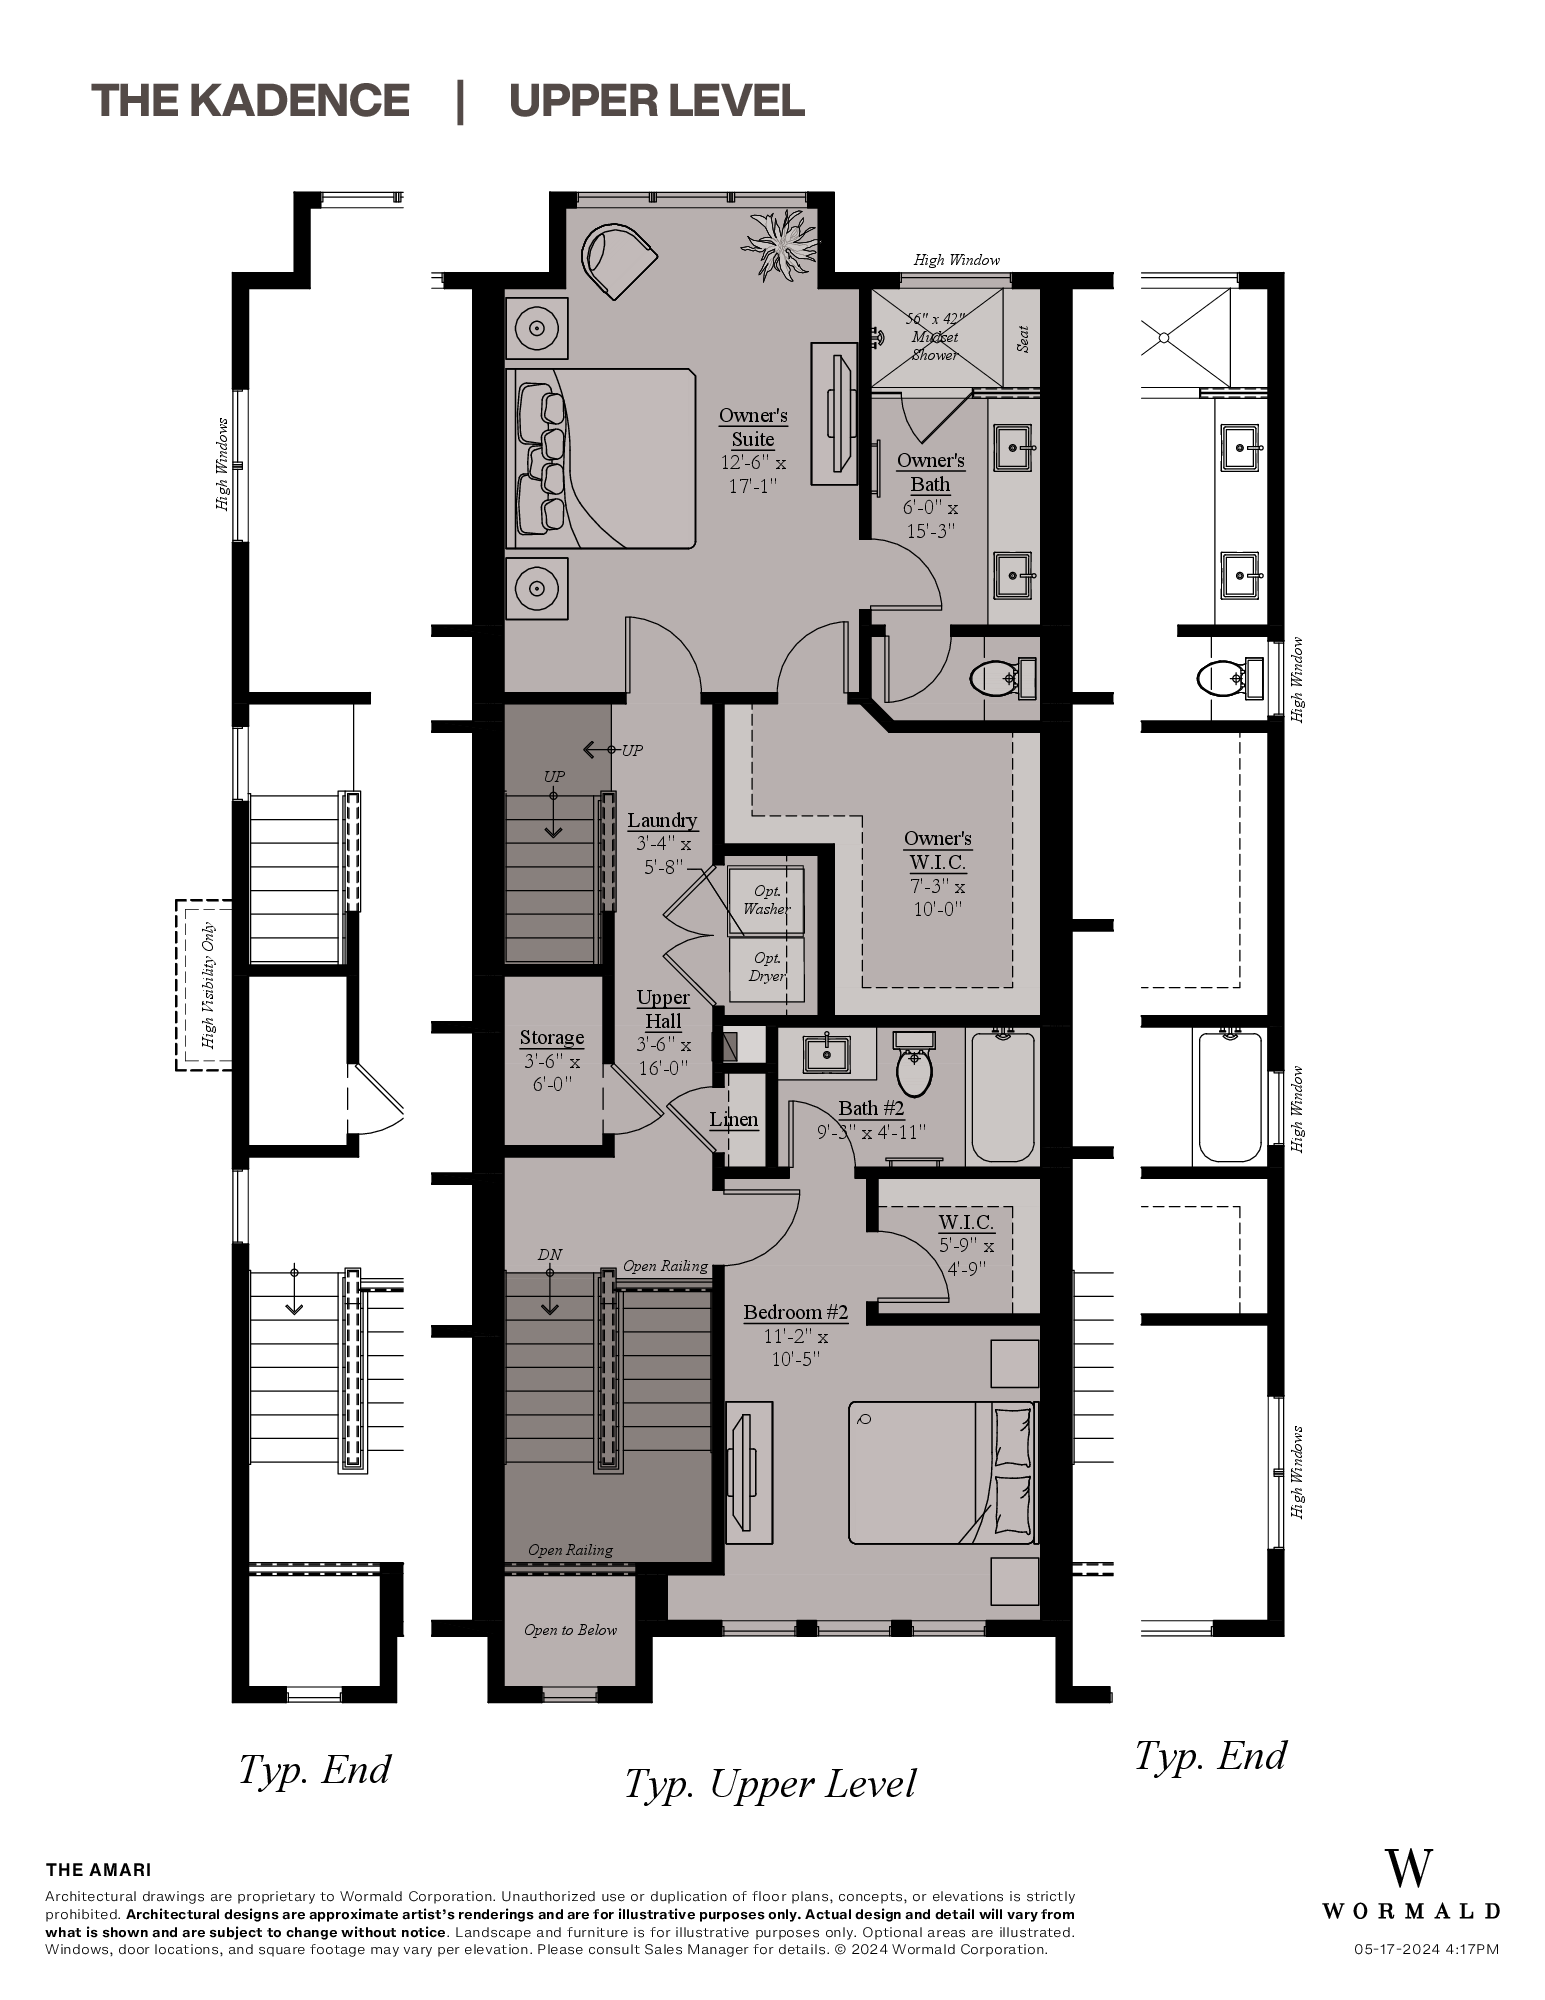 The Kadence floor plan 2